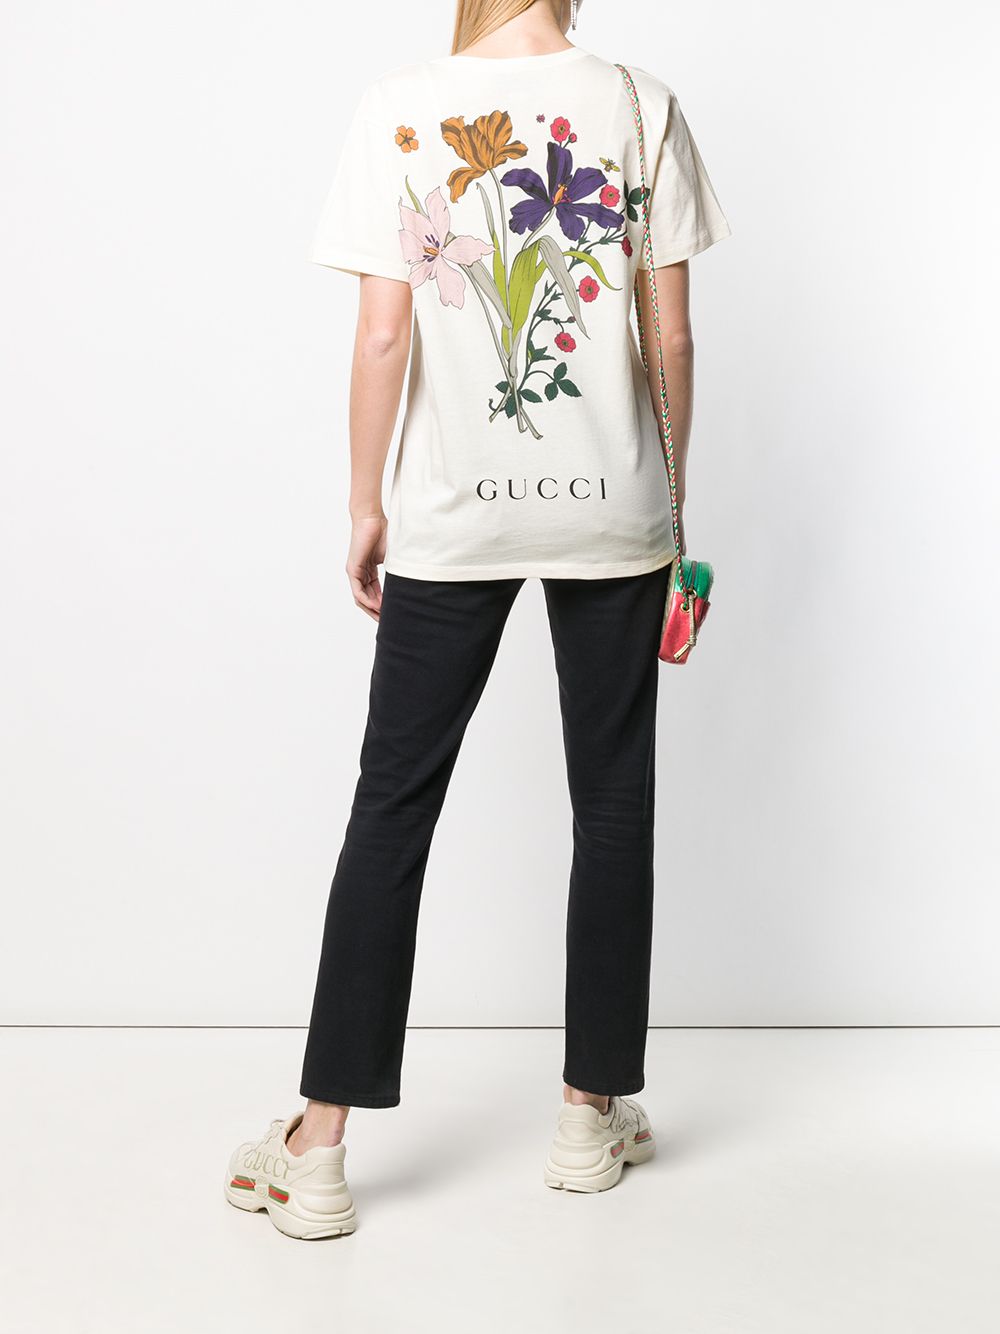 Gucci Chateau Marmont T-shirt - Farfetch